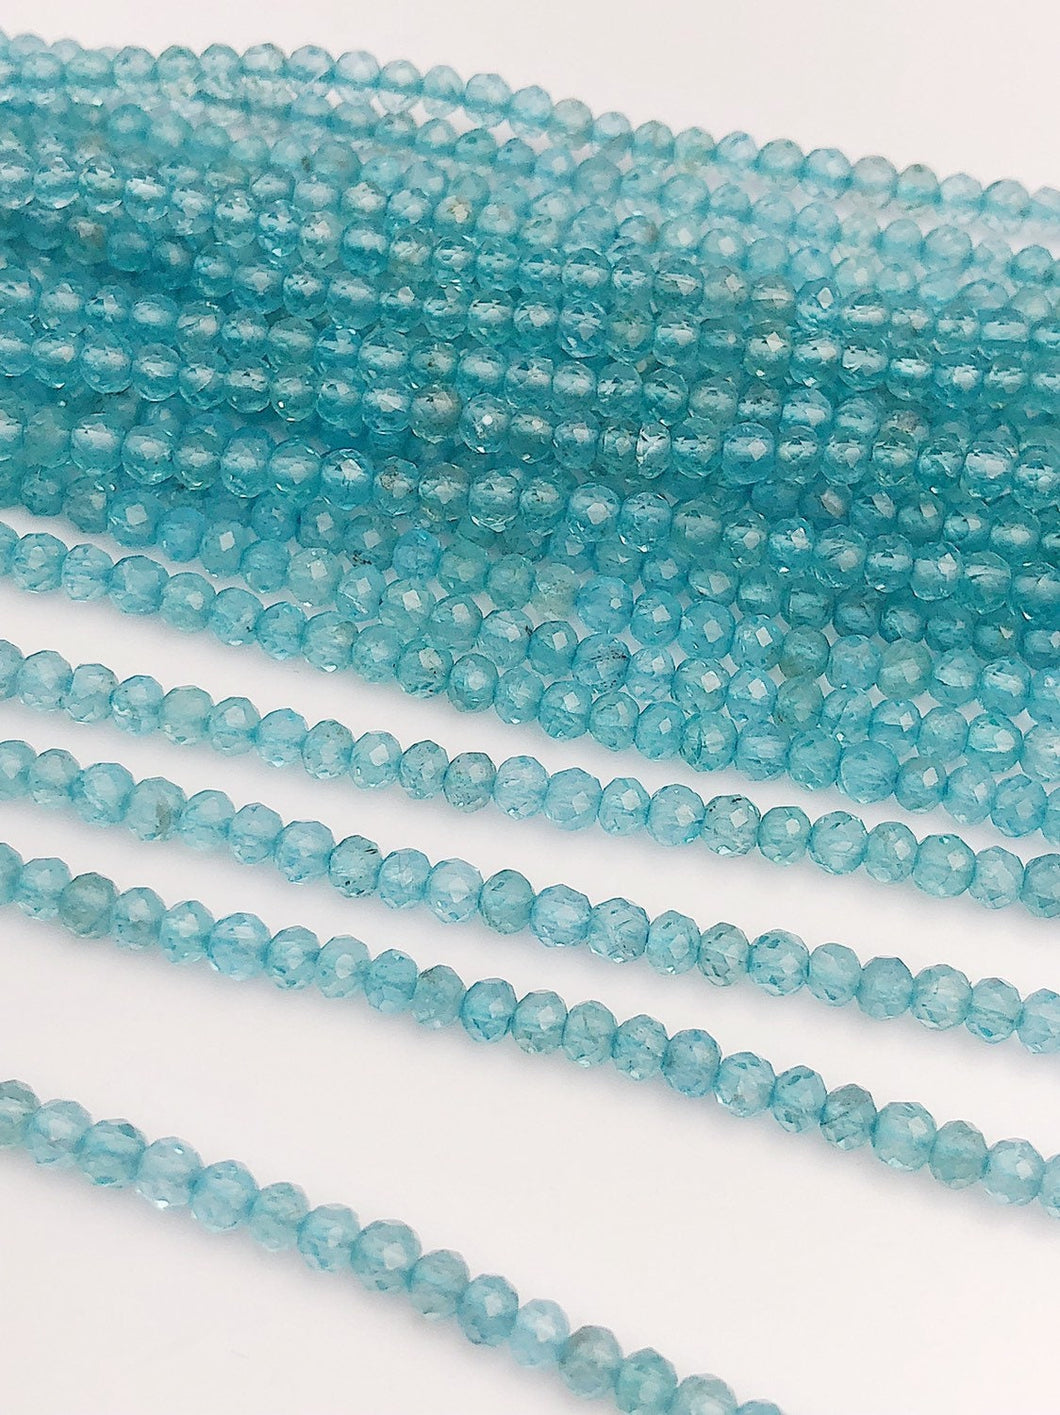 HALF OFF SALE - Blue Appetite Gemstone Beads, Full Strand, Semi Precious Gemstone, 13